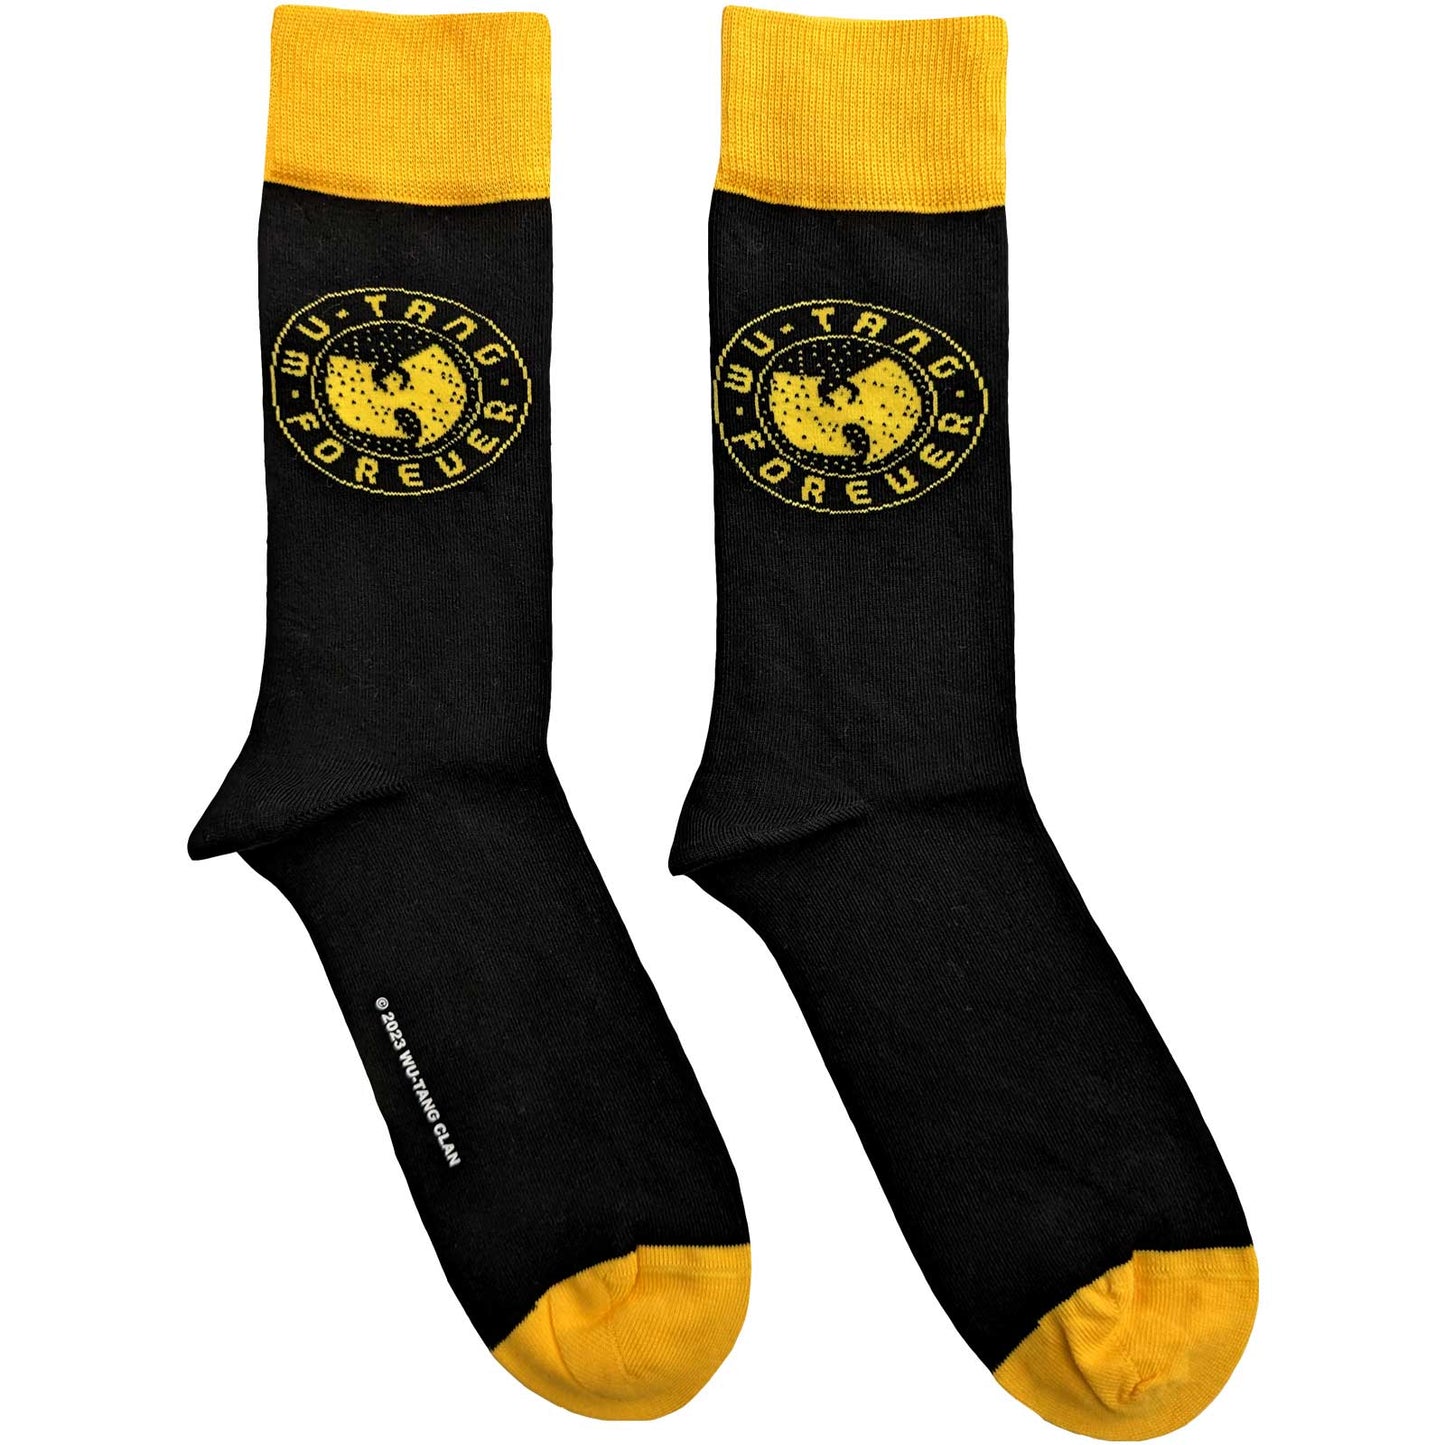 Wu-Tang Clan Socks: Forever